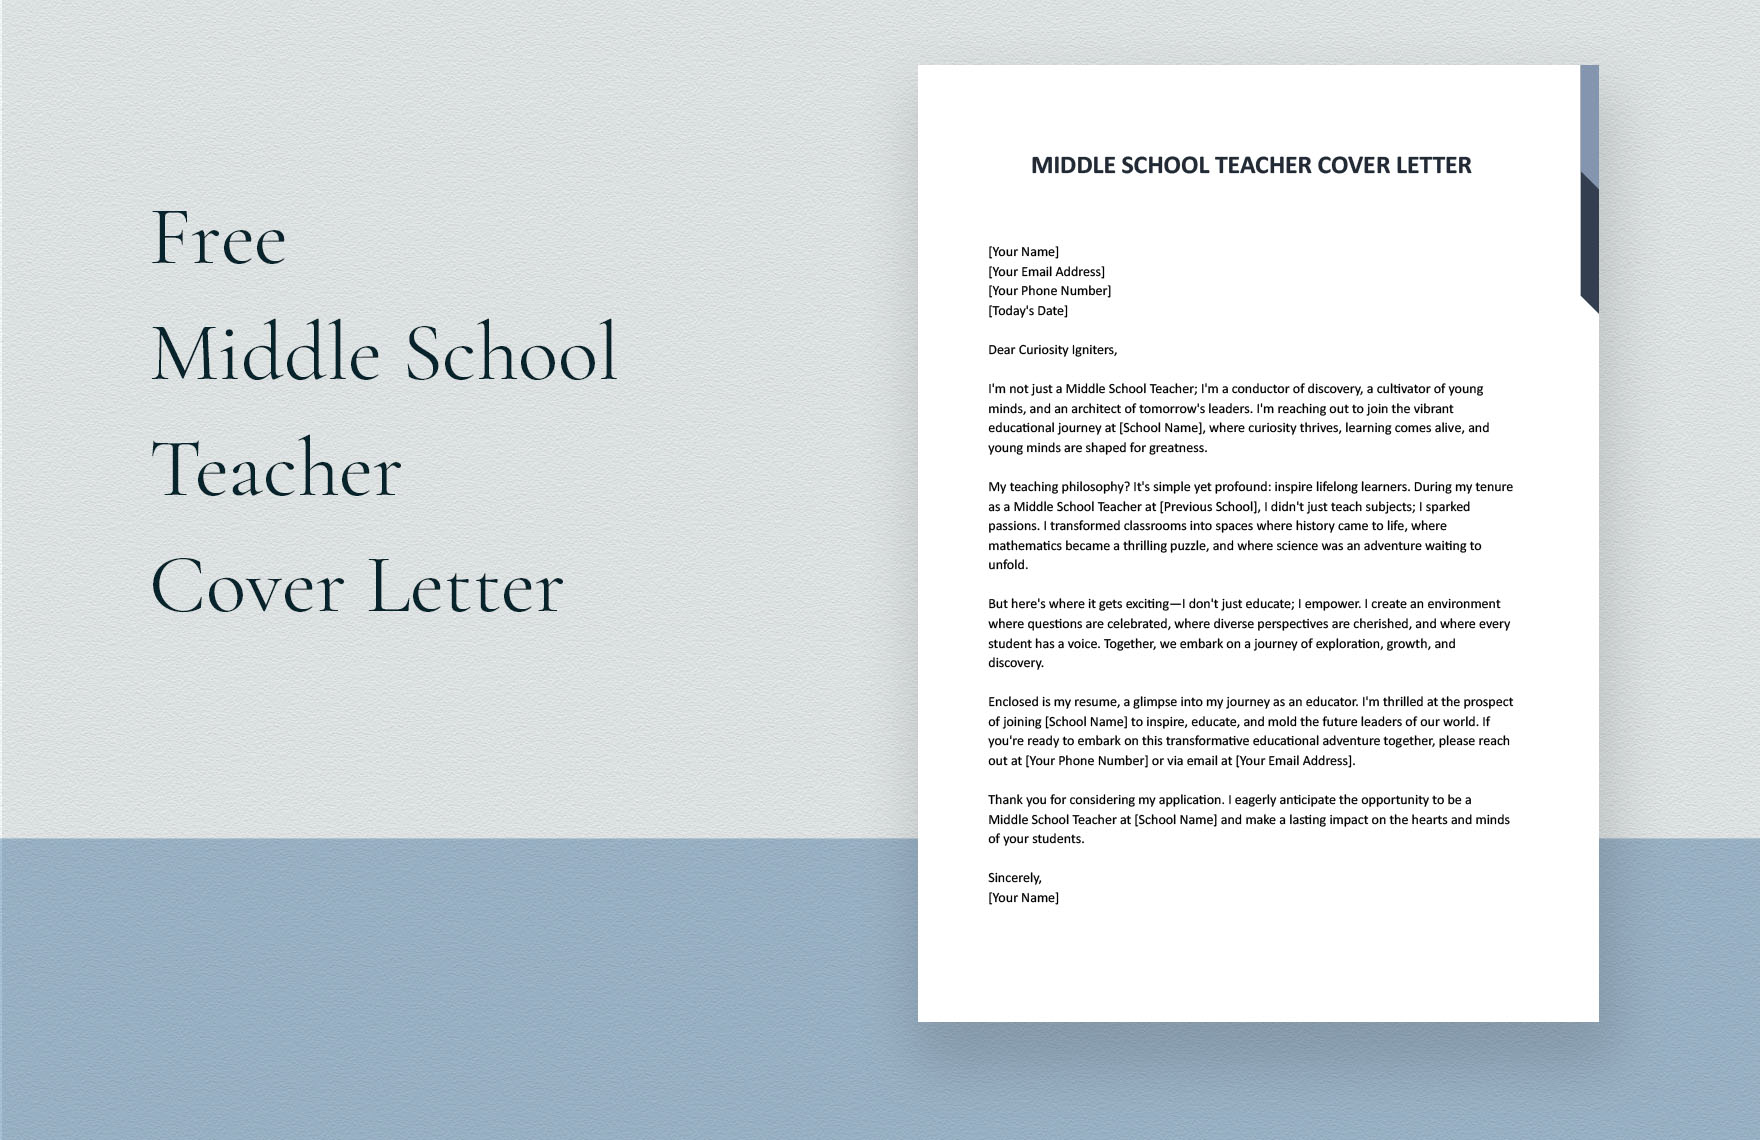 Middle School Teacher Cover Letter